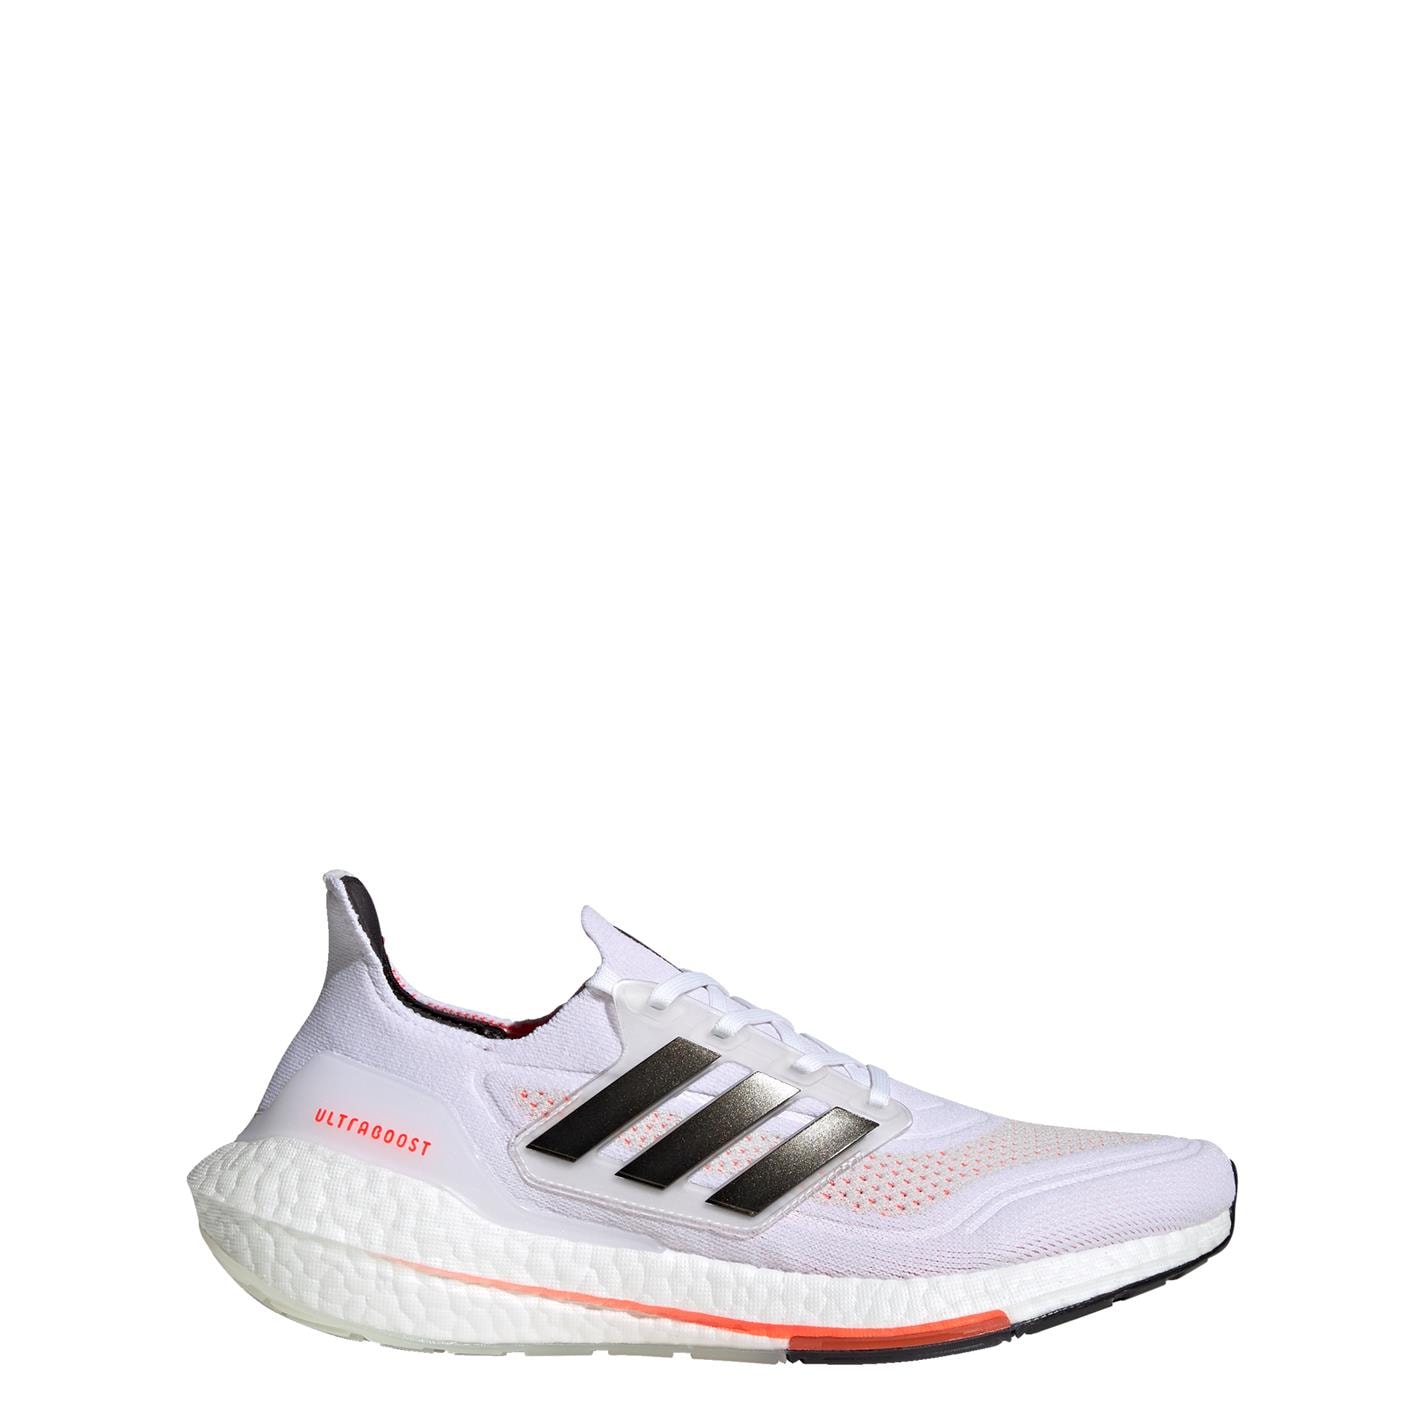 ultraboost running shoe adidas